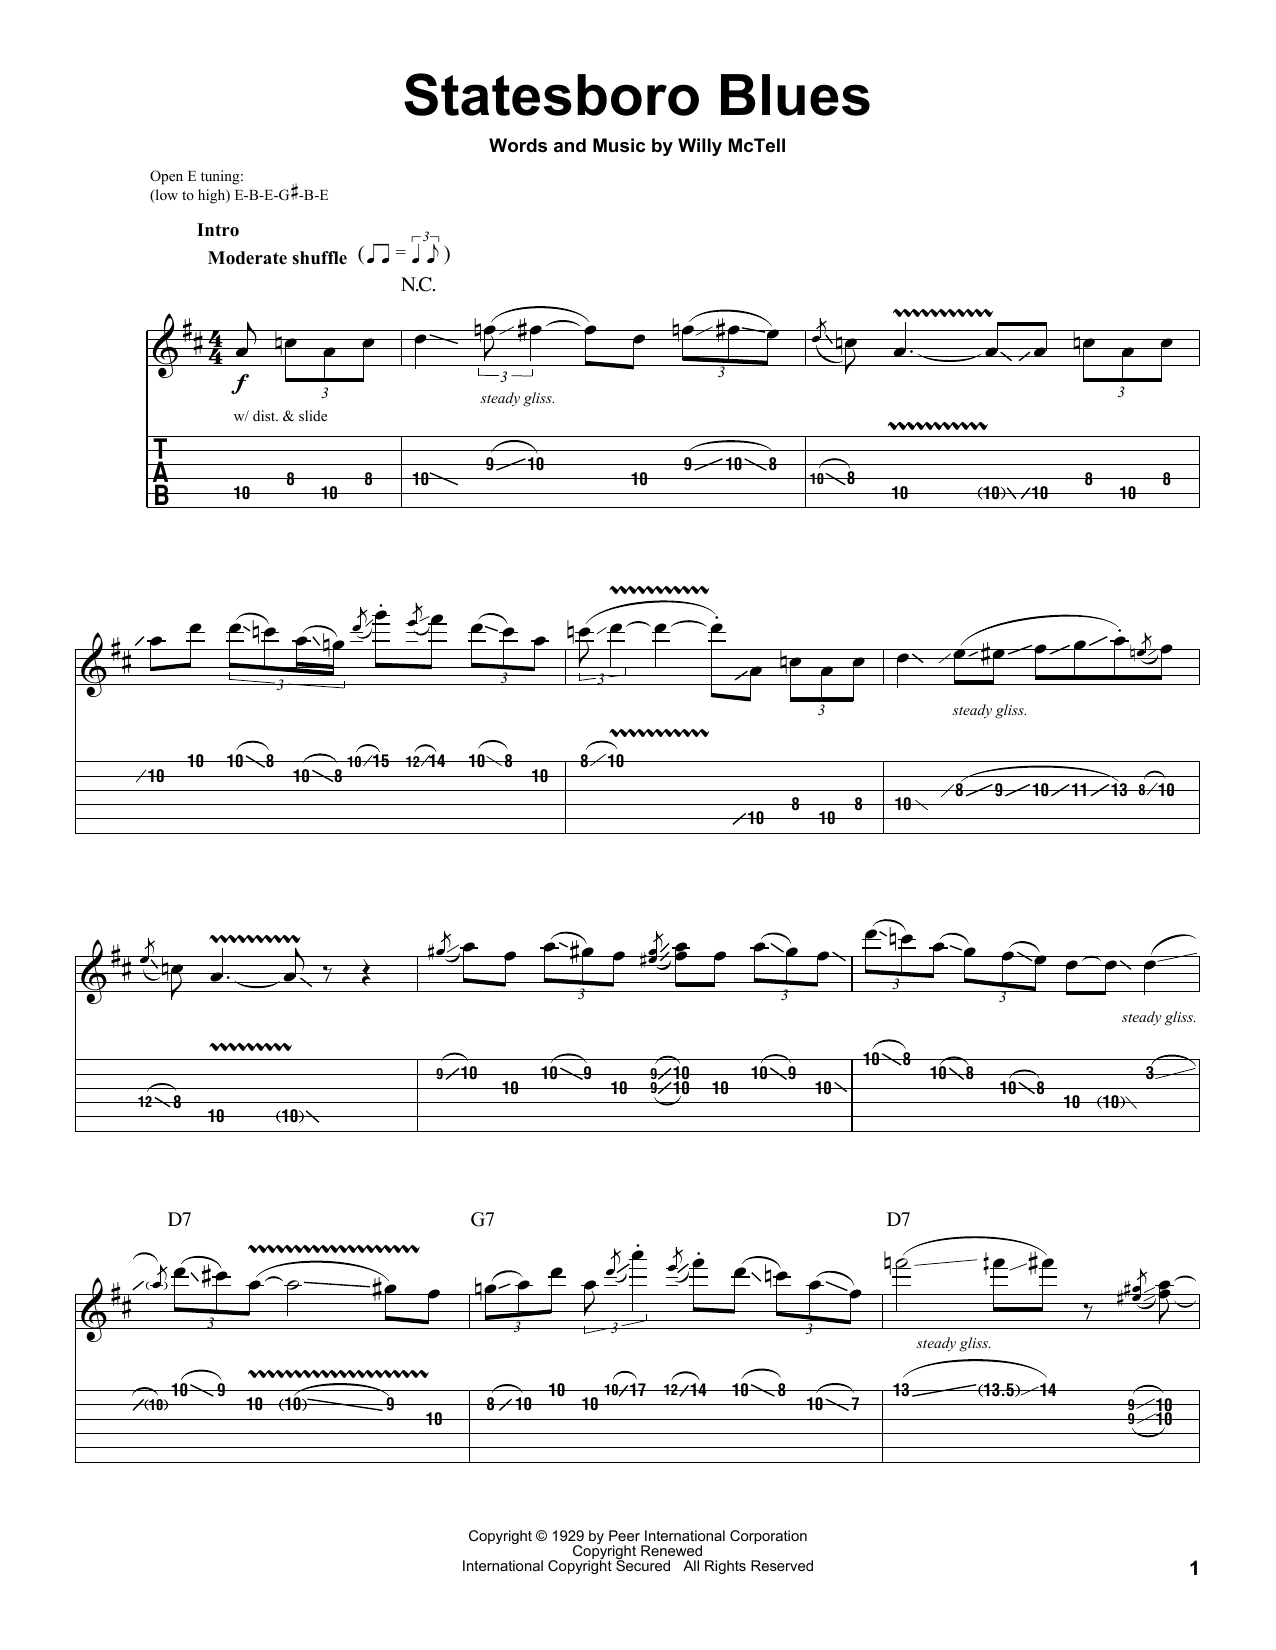 Allman Brothers Band Statesboro Blues Sheet Music Notes & Chords for Lyrics & Chords - Download or Print PDF